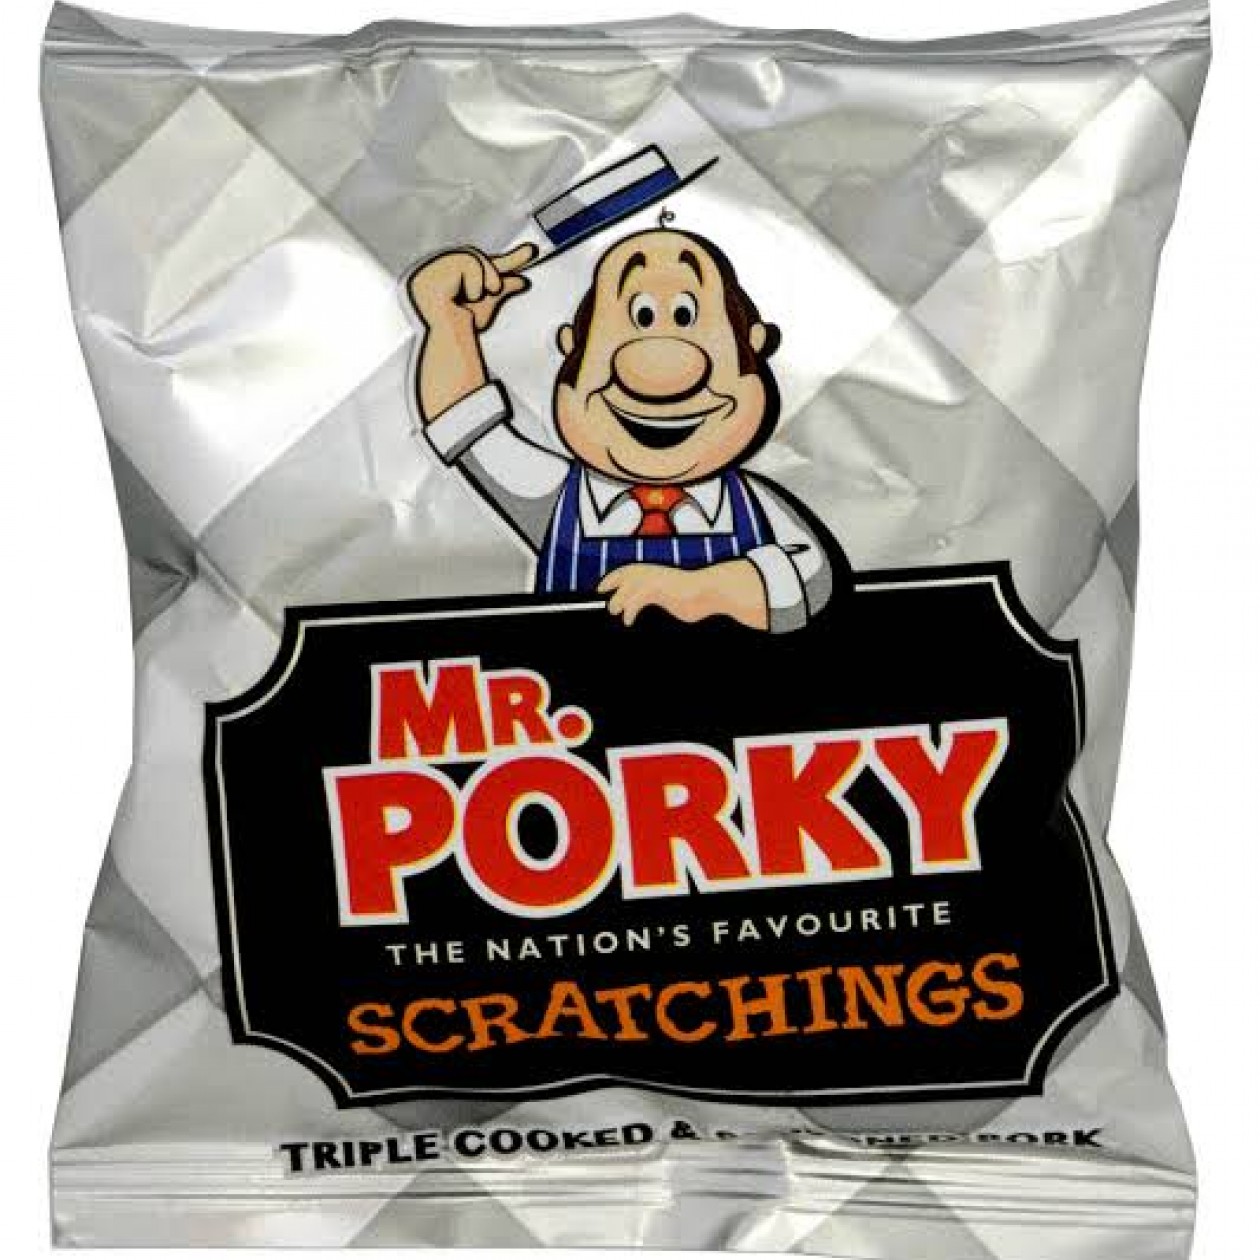 Mr. Porky Pork Scratchings 18g (Pack of 20)